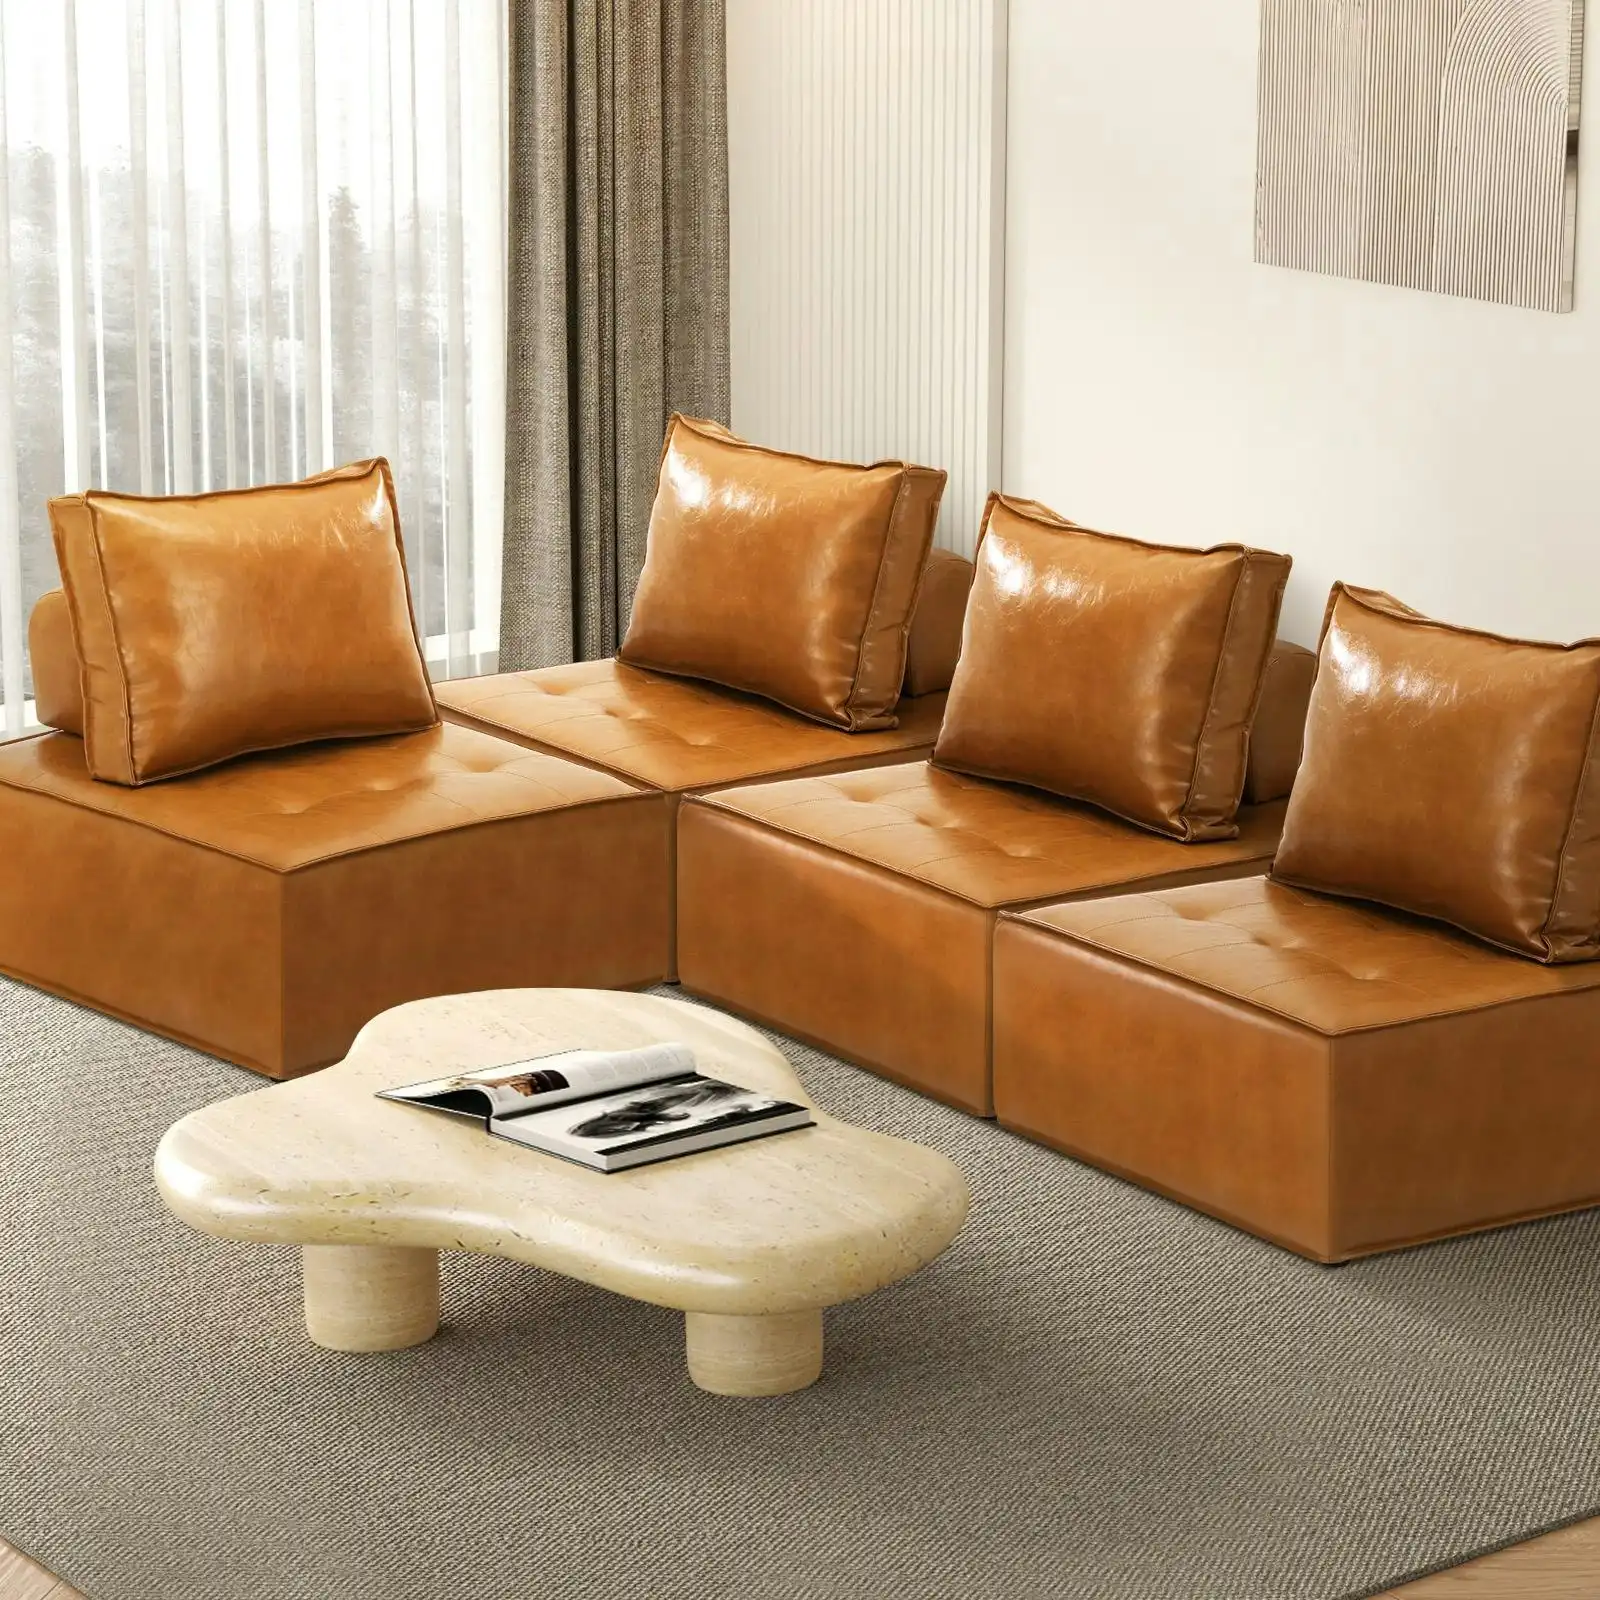 Oikiture 4PC Modular Sofa Lounge Chair Armless TOFU Back PU Leather Brown